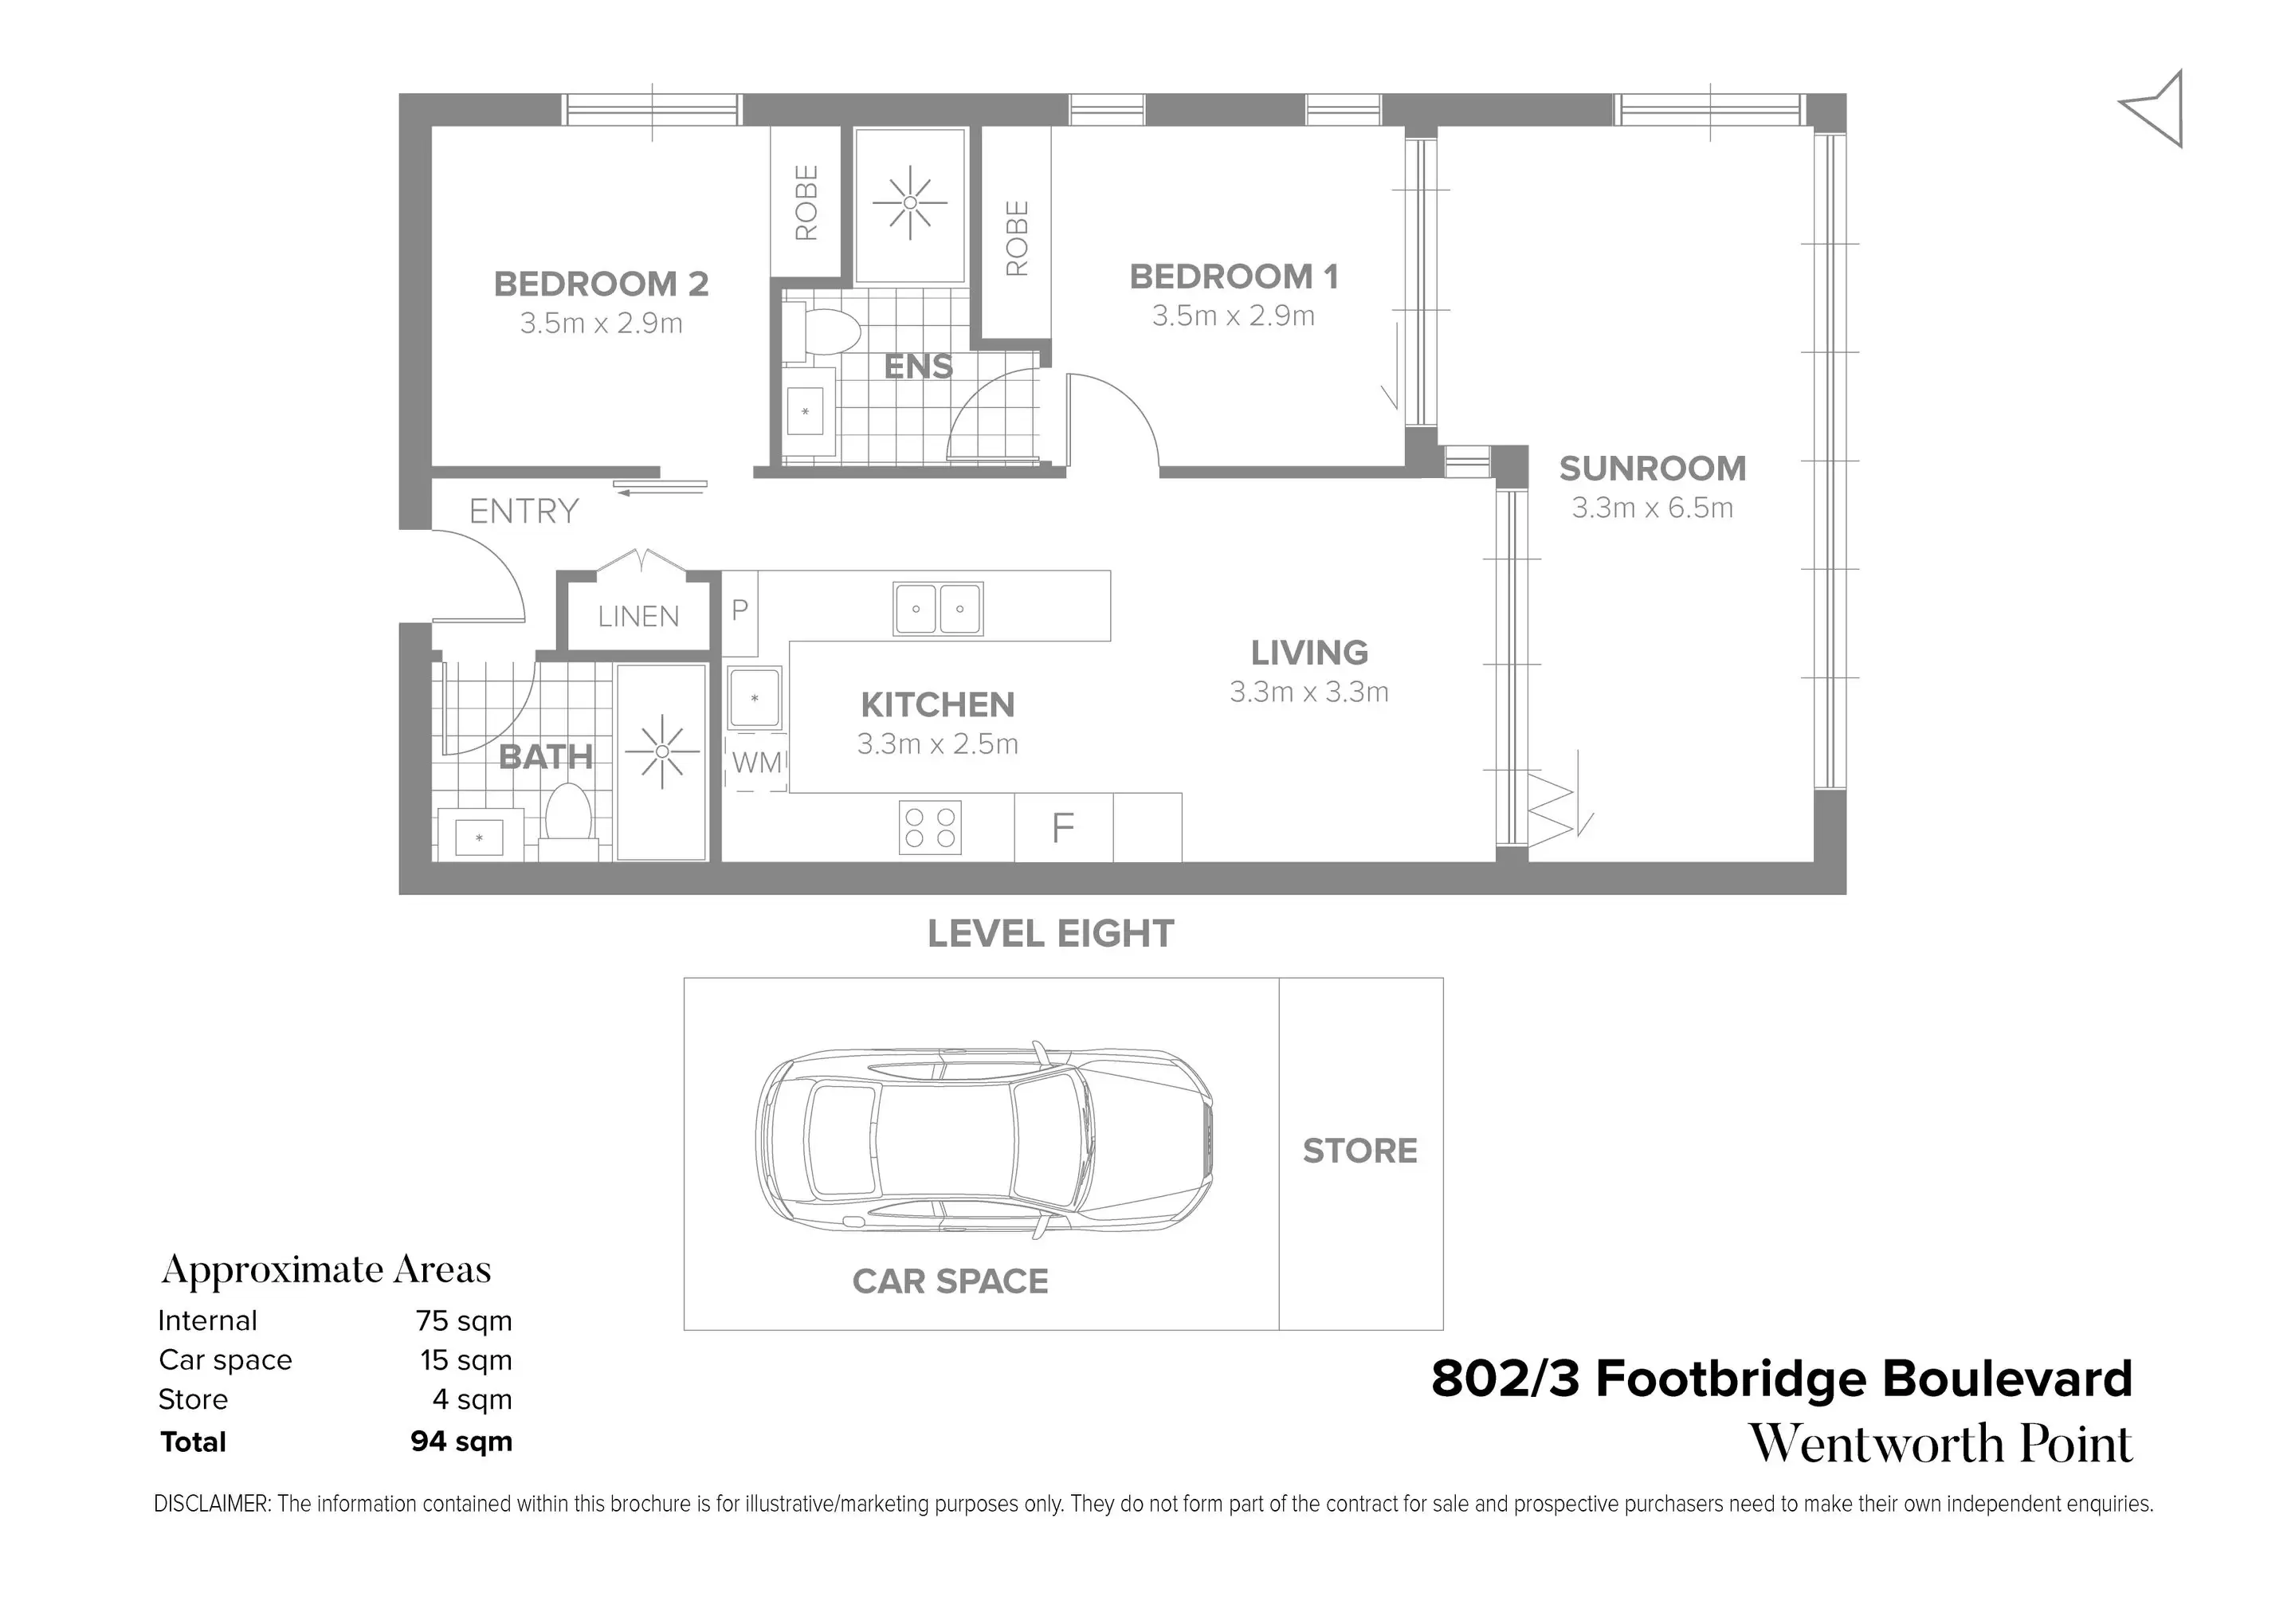 802/3 Footbridge Boulevard, Wentworth Point Sold by Chidiac Realty - floorplan